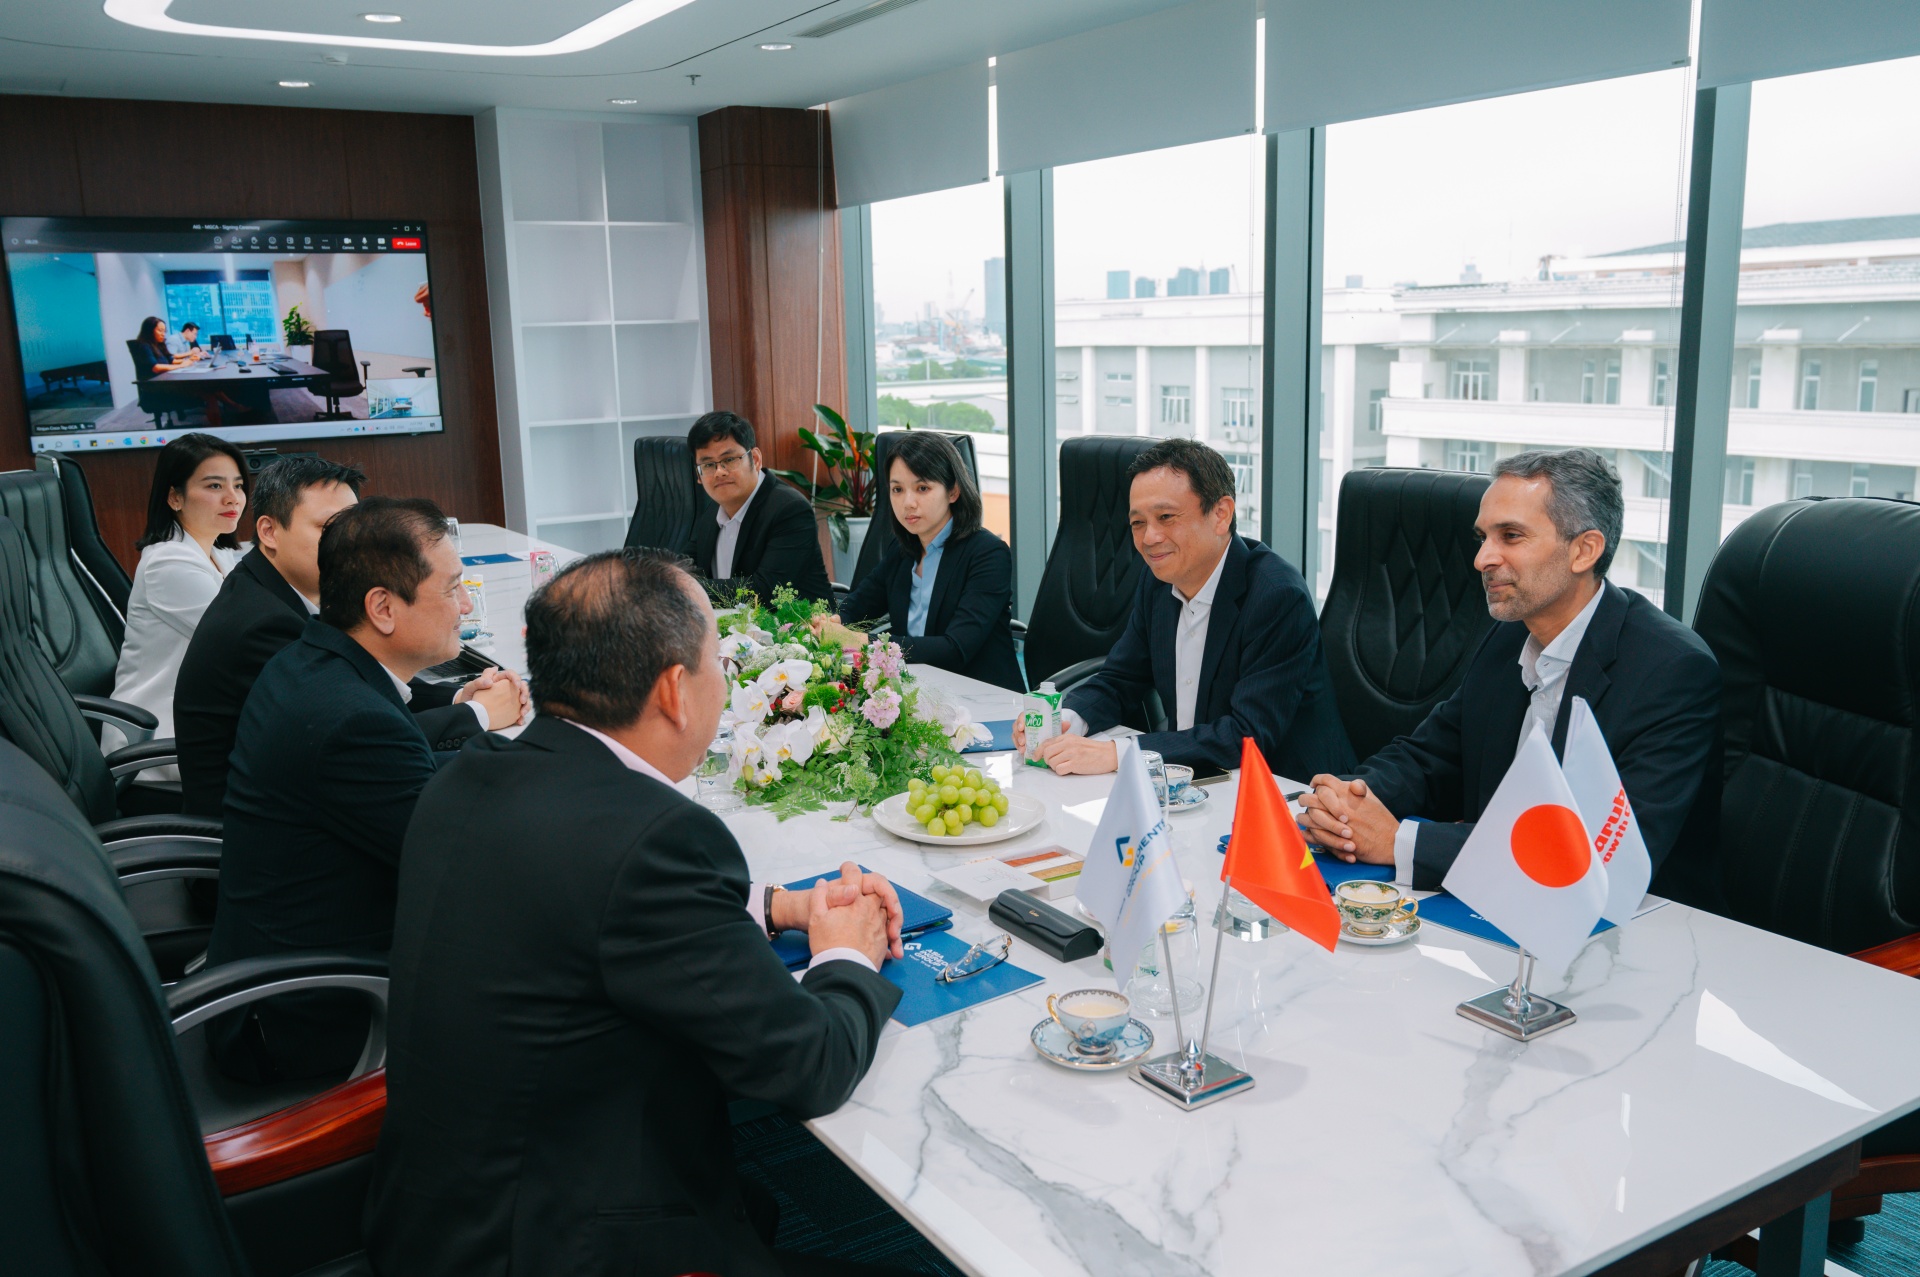 Japan’s Marubeni becomes strategic partner of AIG